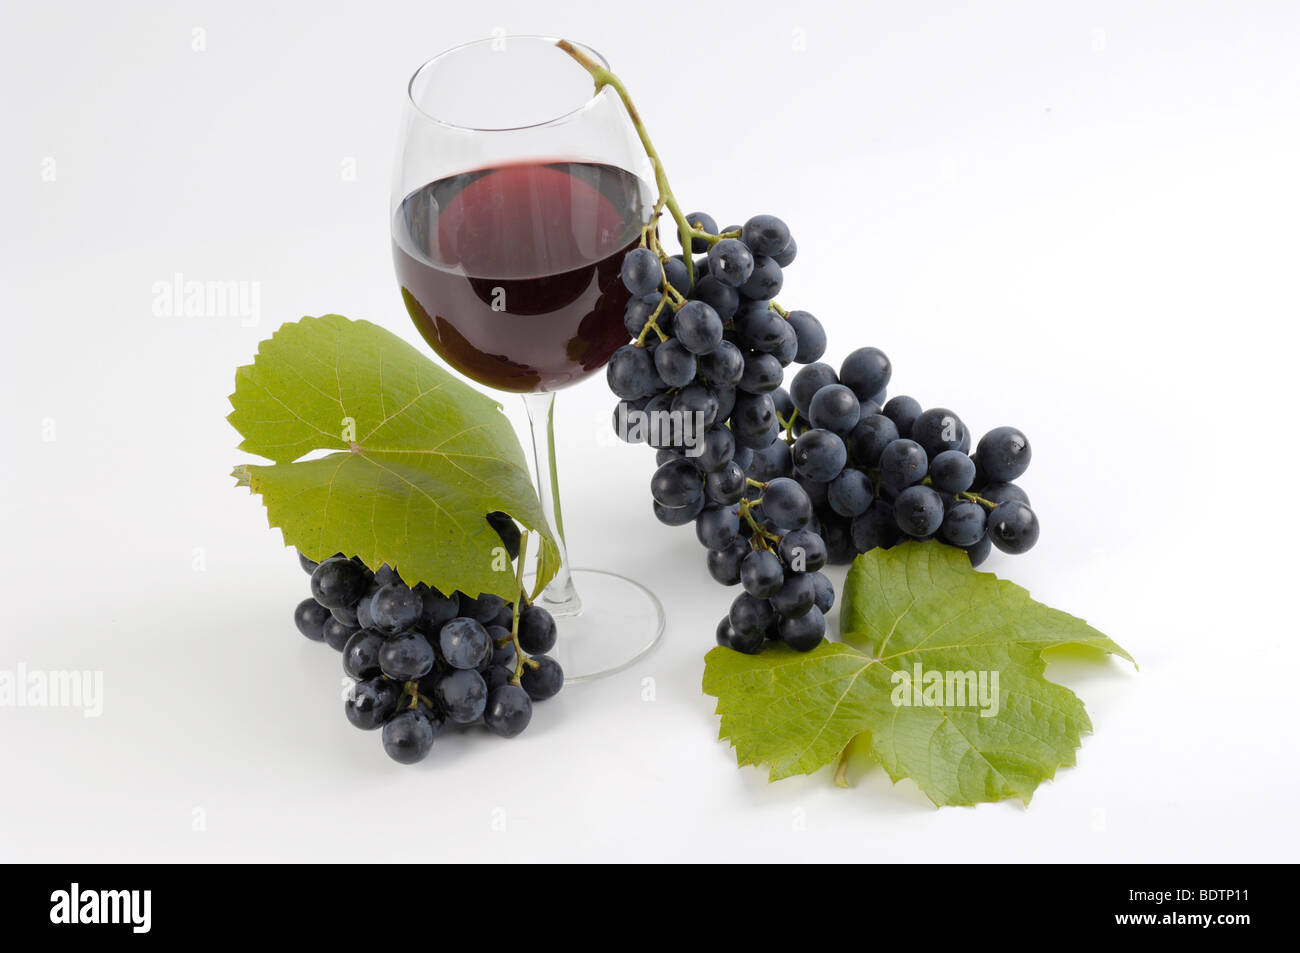 Alkoholische getraenke hi-res stock photography and images - Alamy